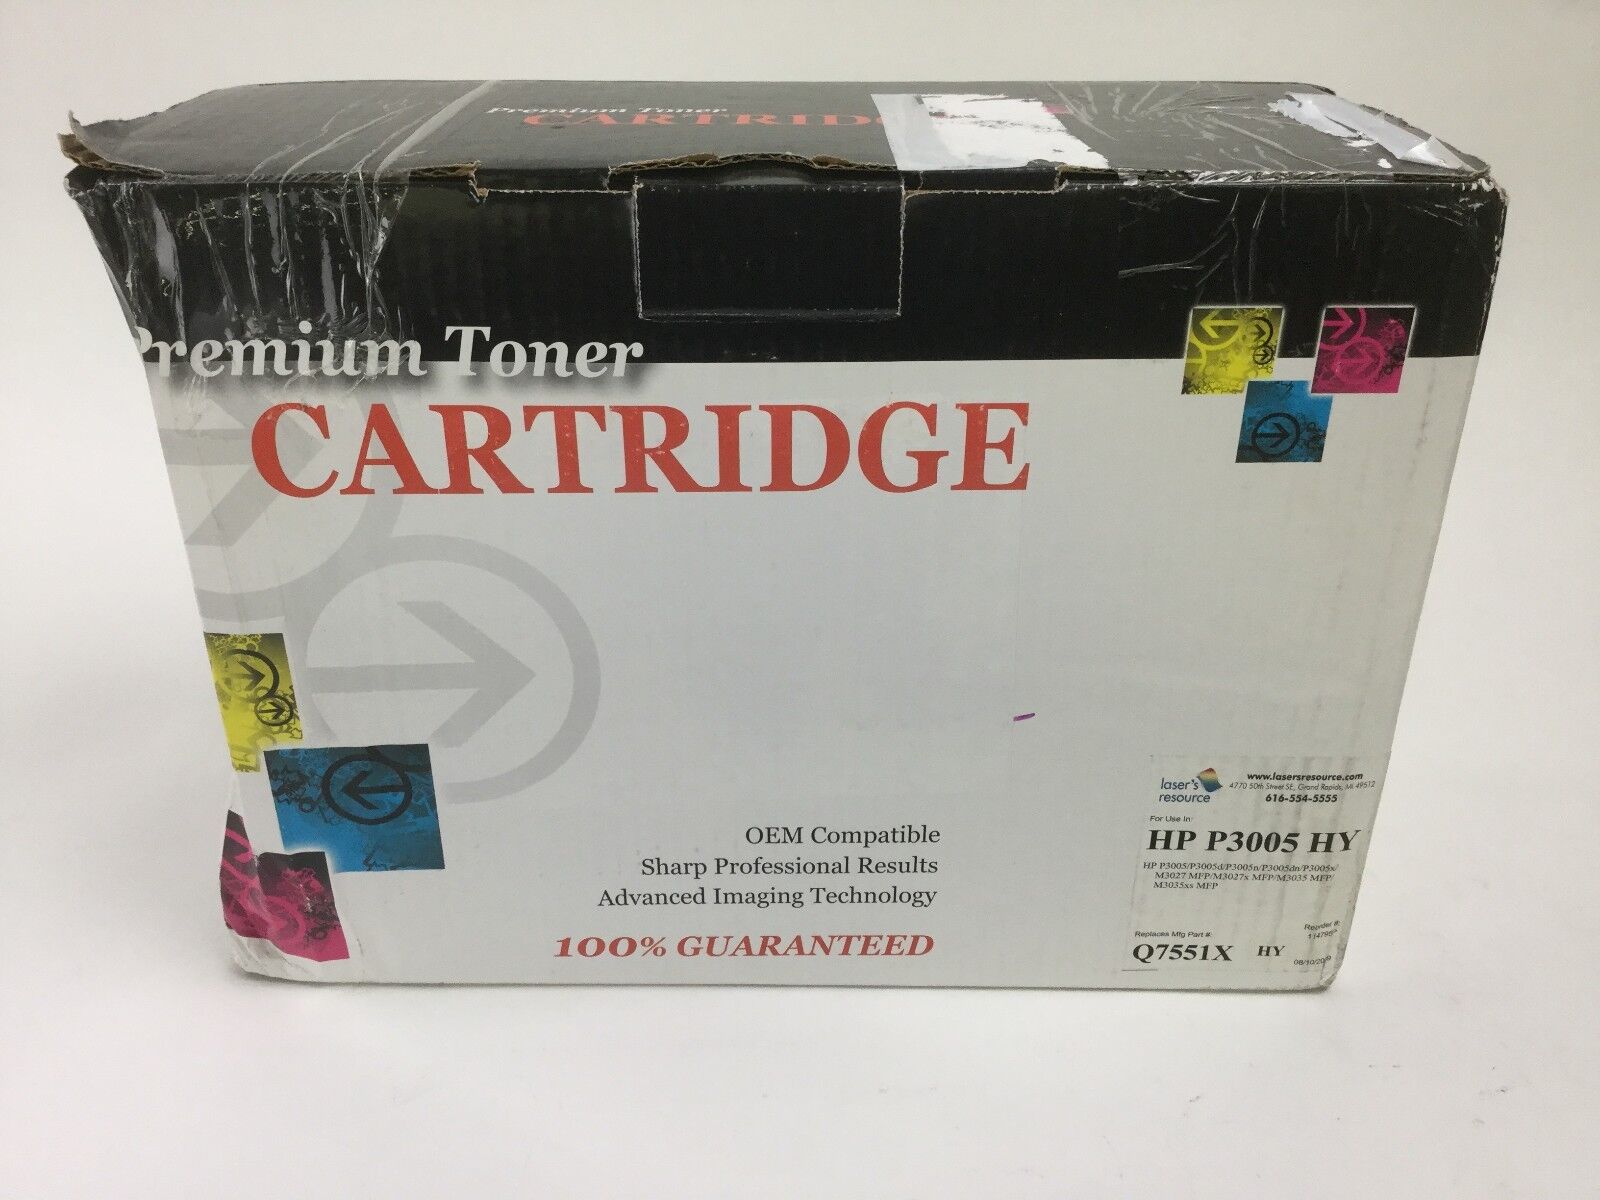 Premium Toner Cartridge for HP Q7551X, NEW Factory Sealed